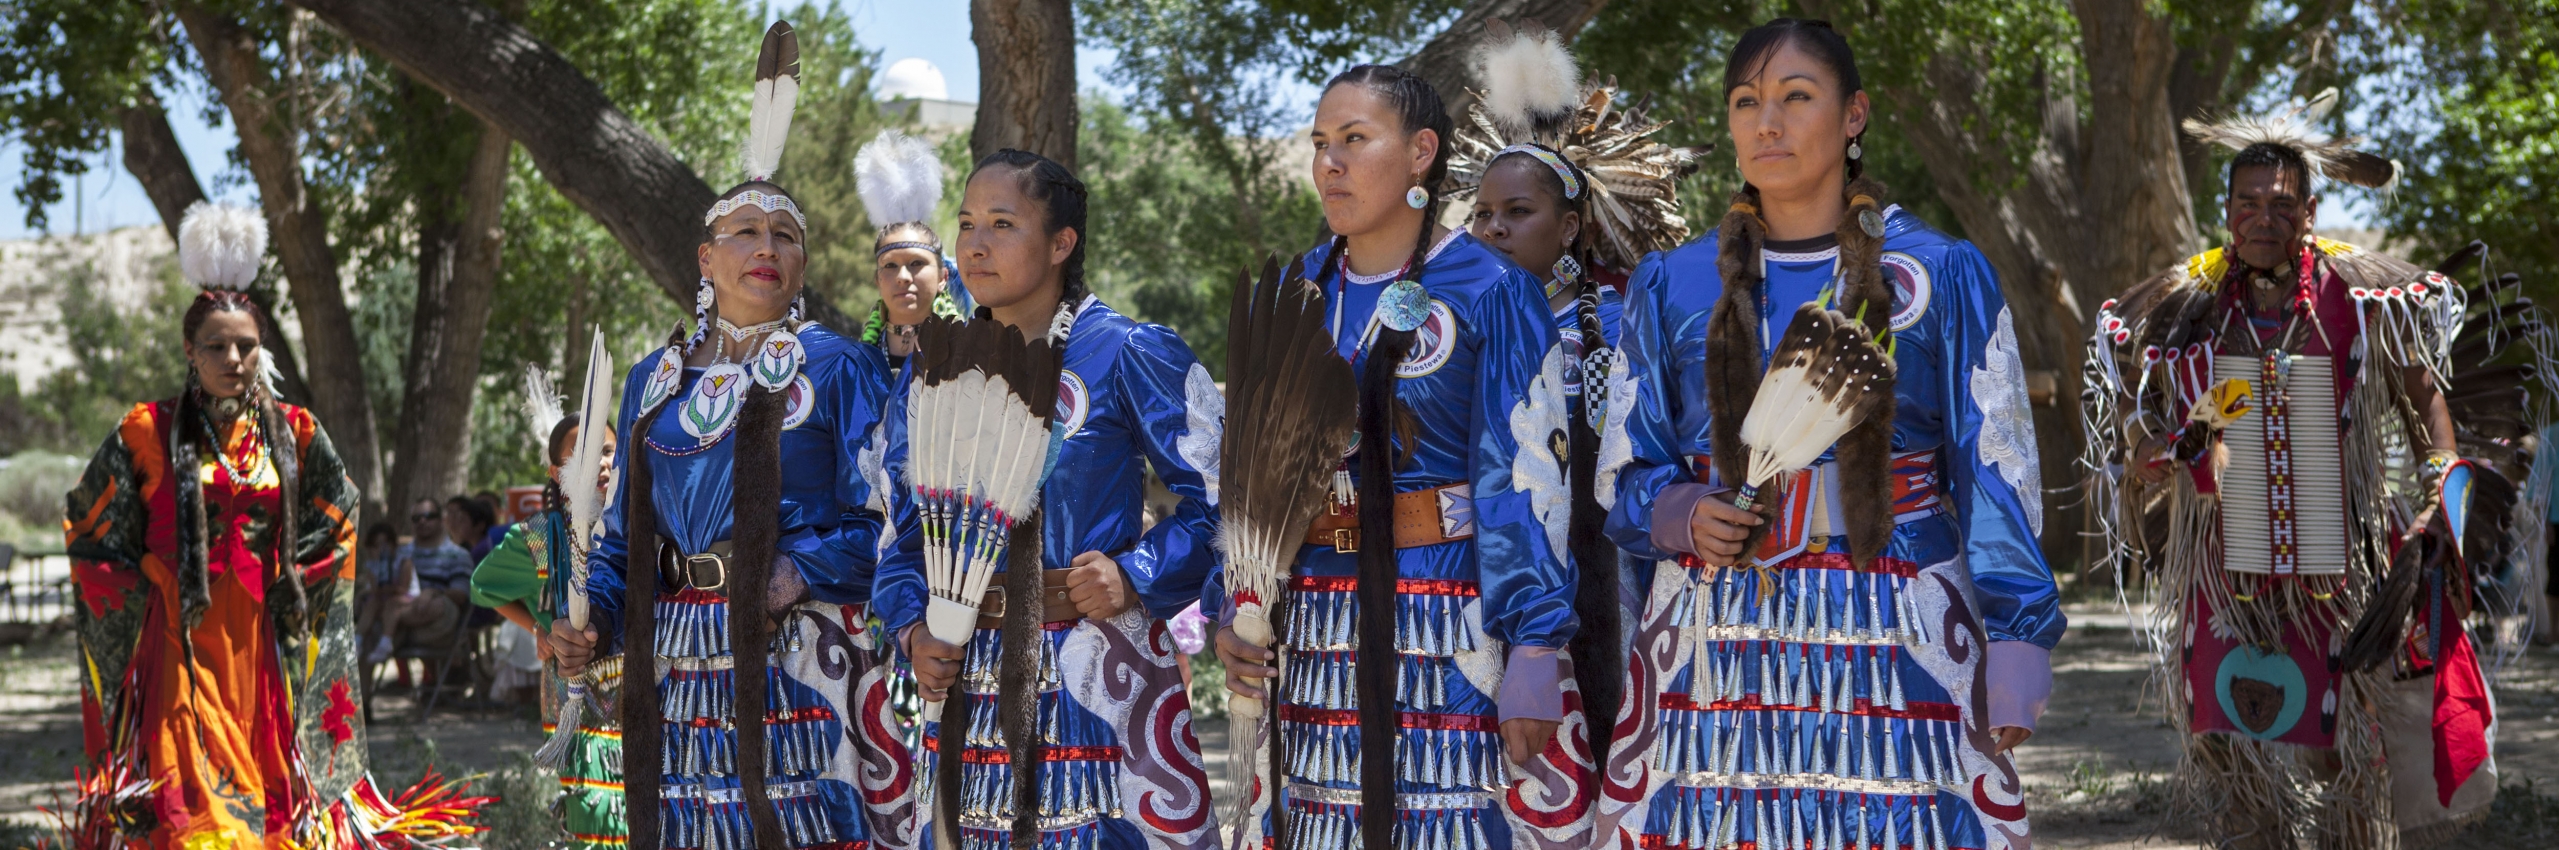 Native American women warriors